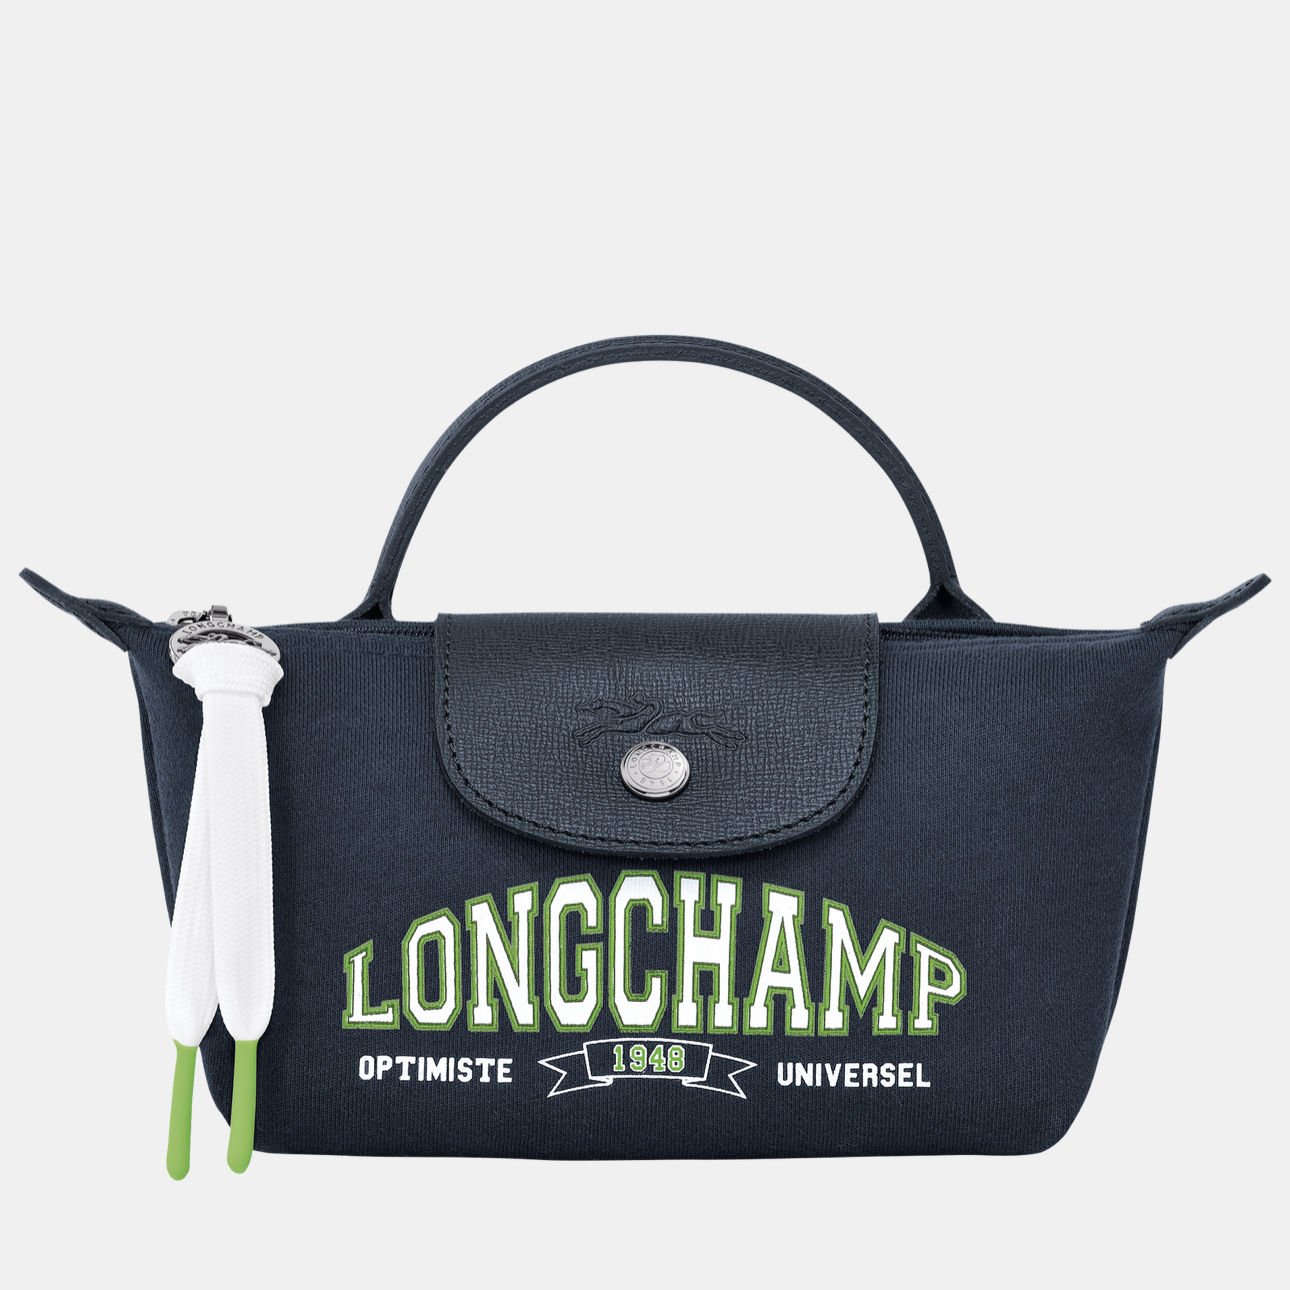 Longchamp Pouch